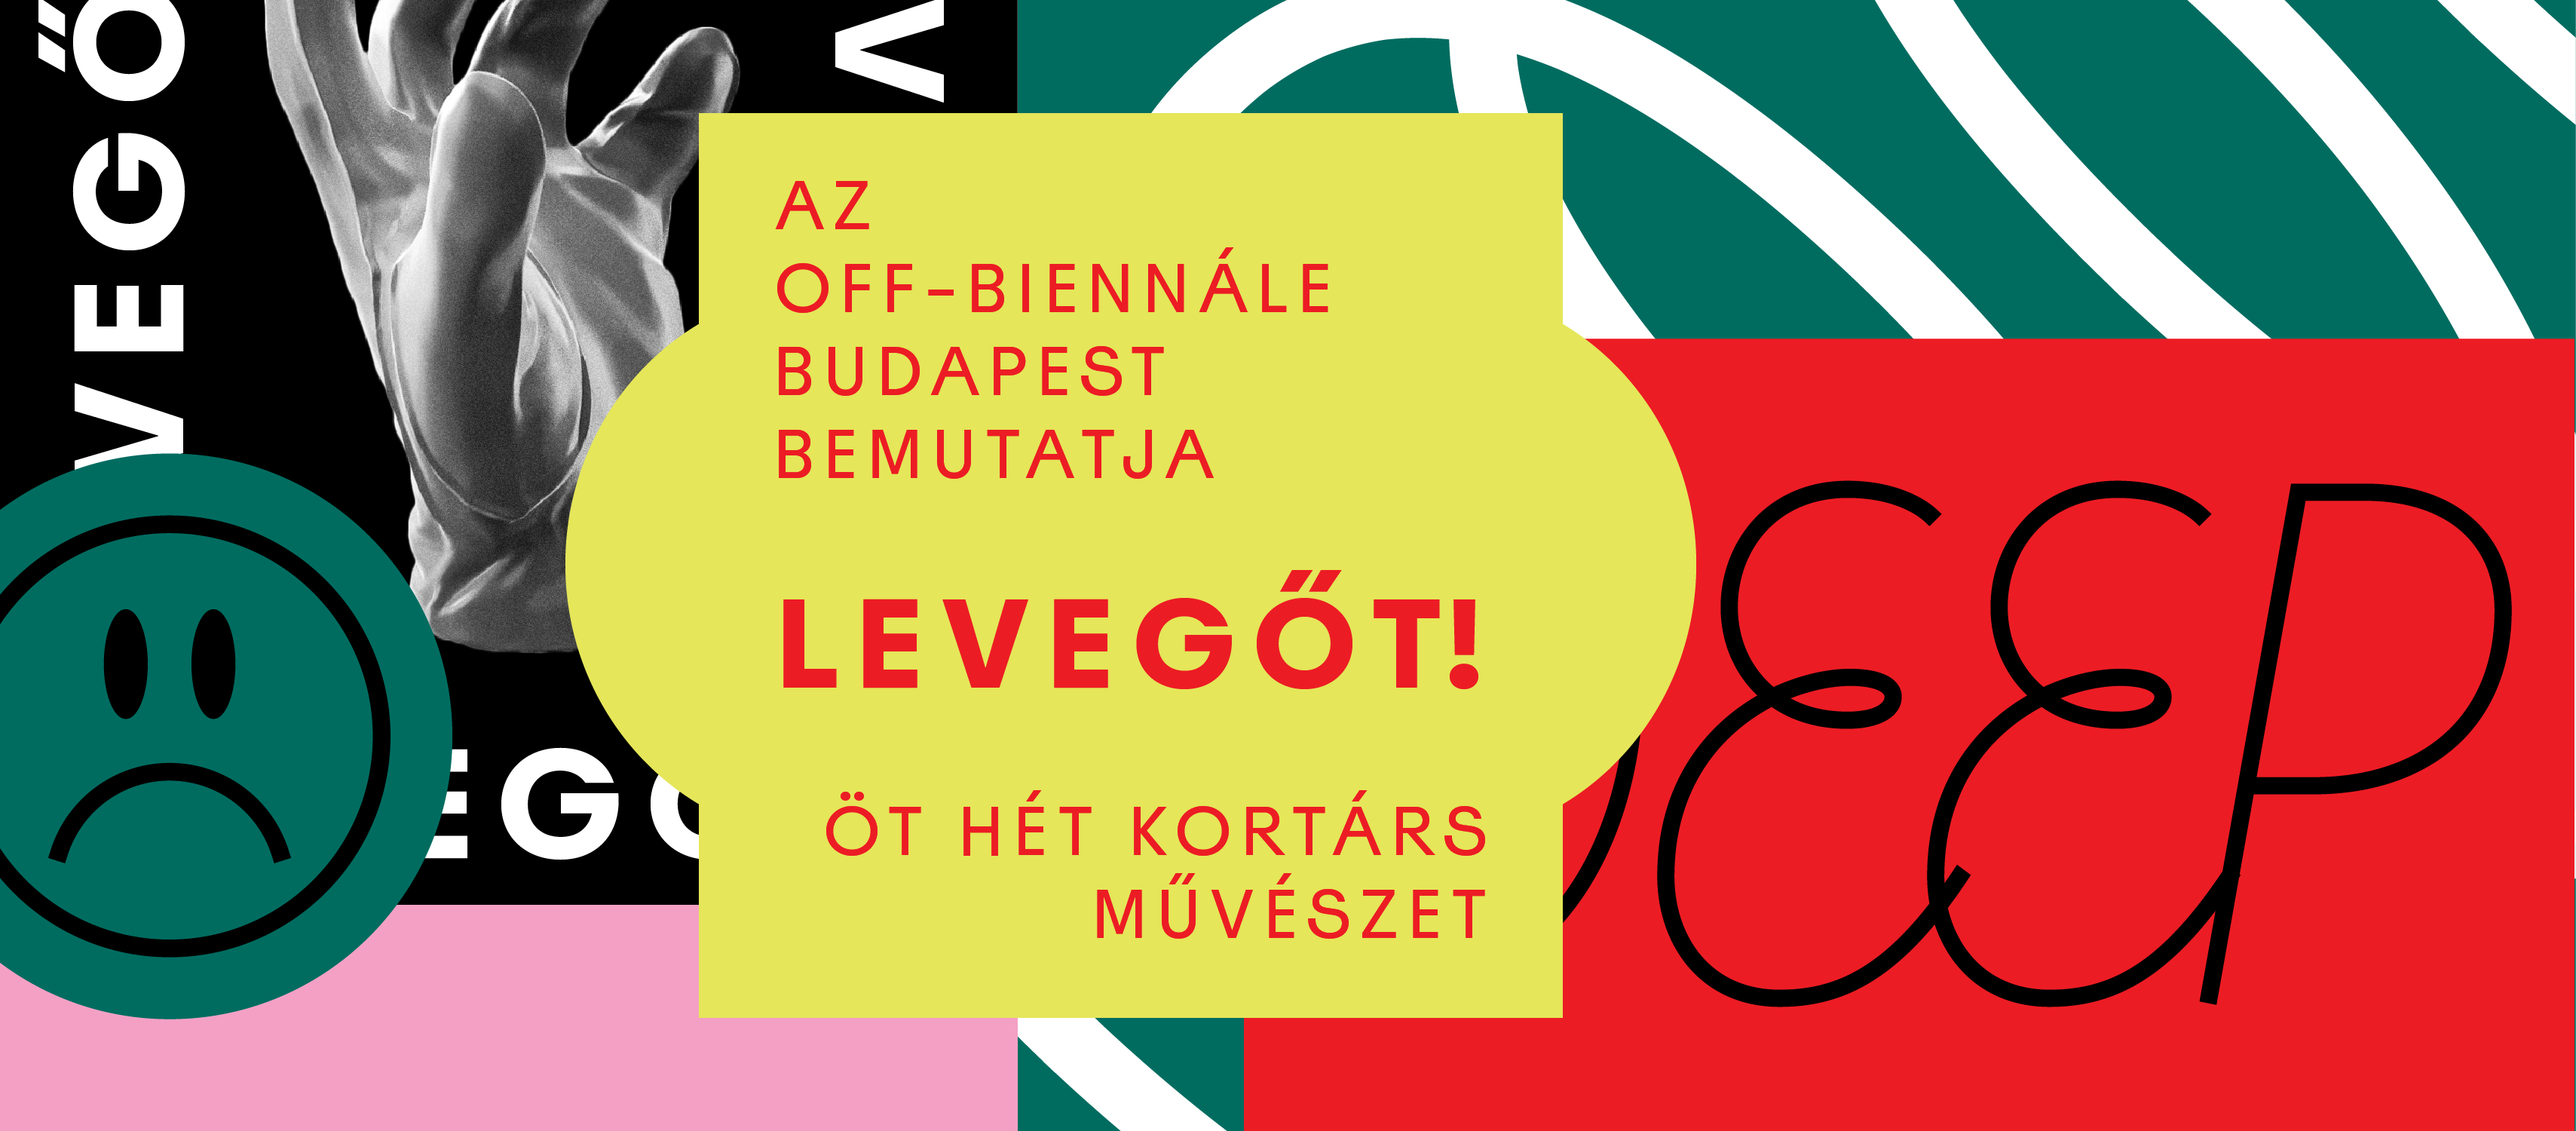 Budapest art festival OFF-Biennále to return this spring